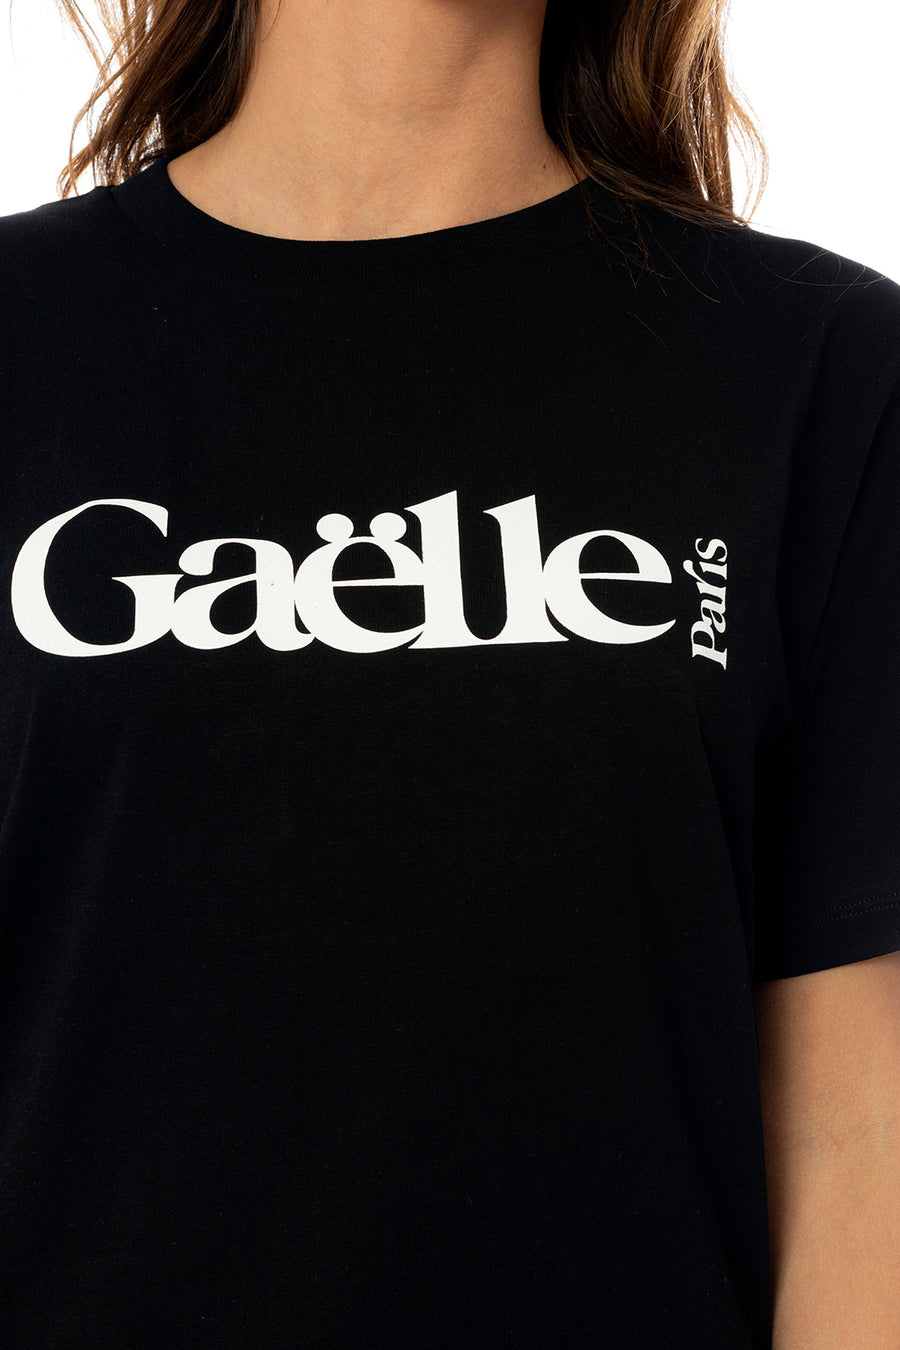 T-shirt GAELLE PARIS GBDP16701